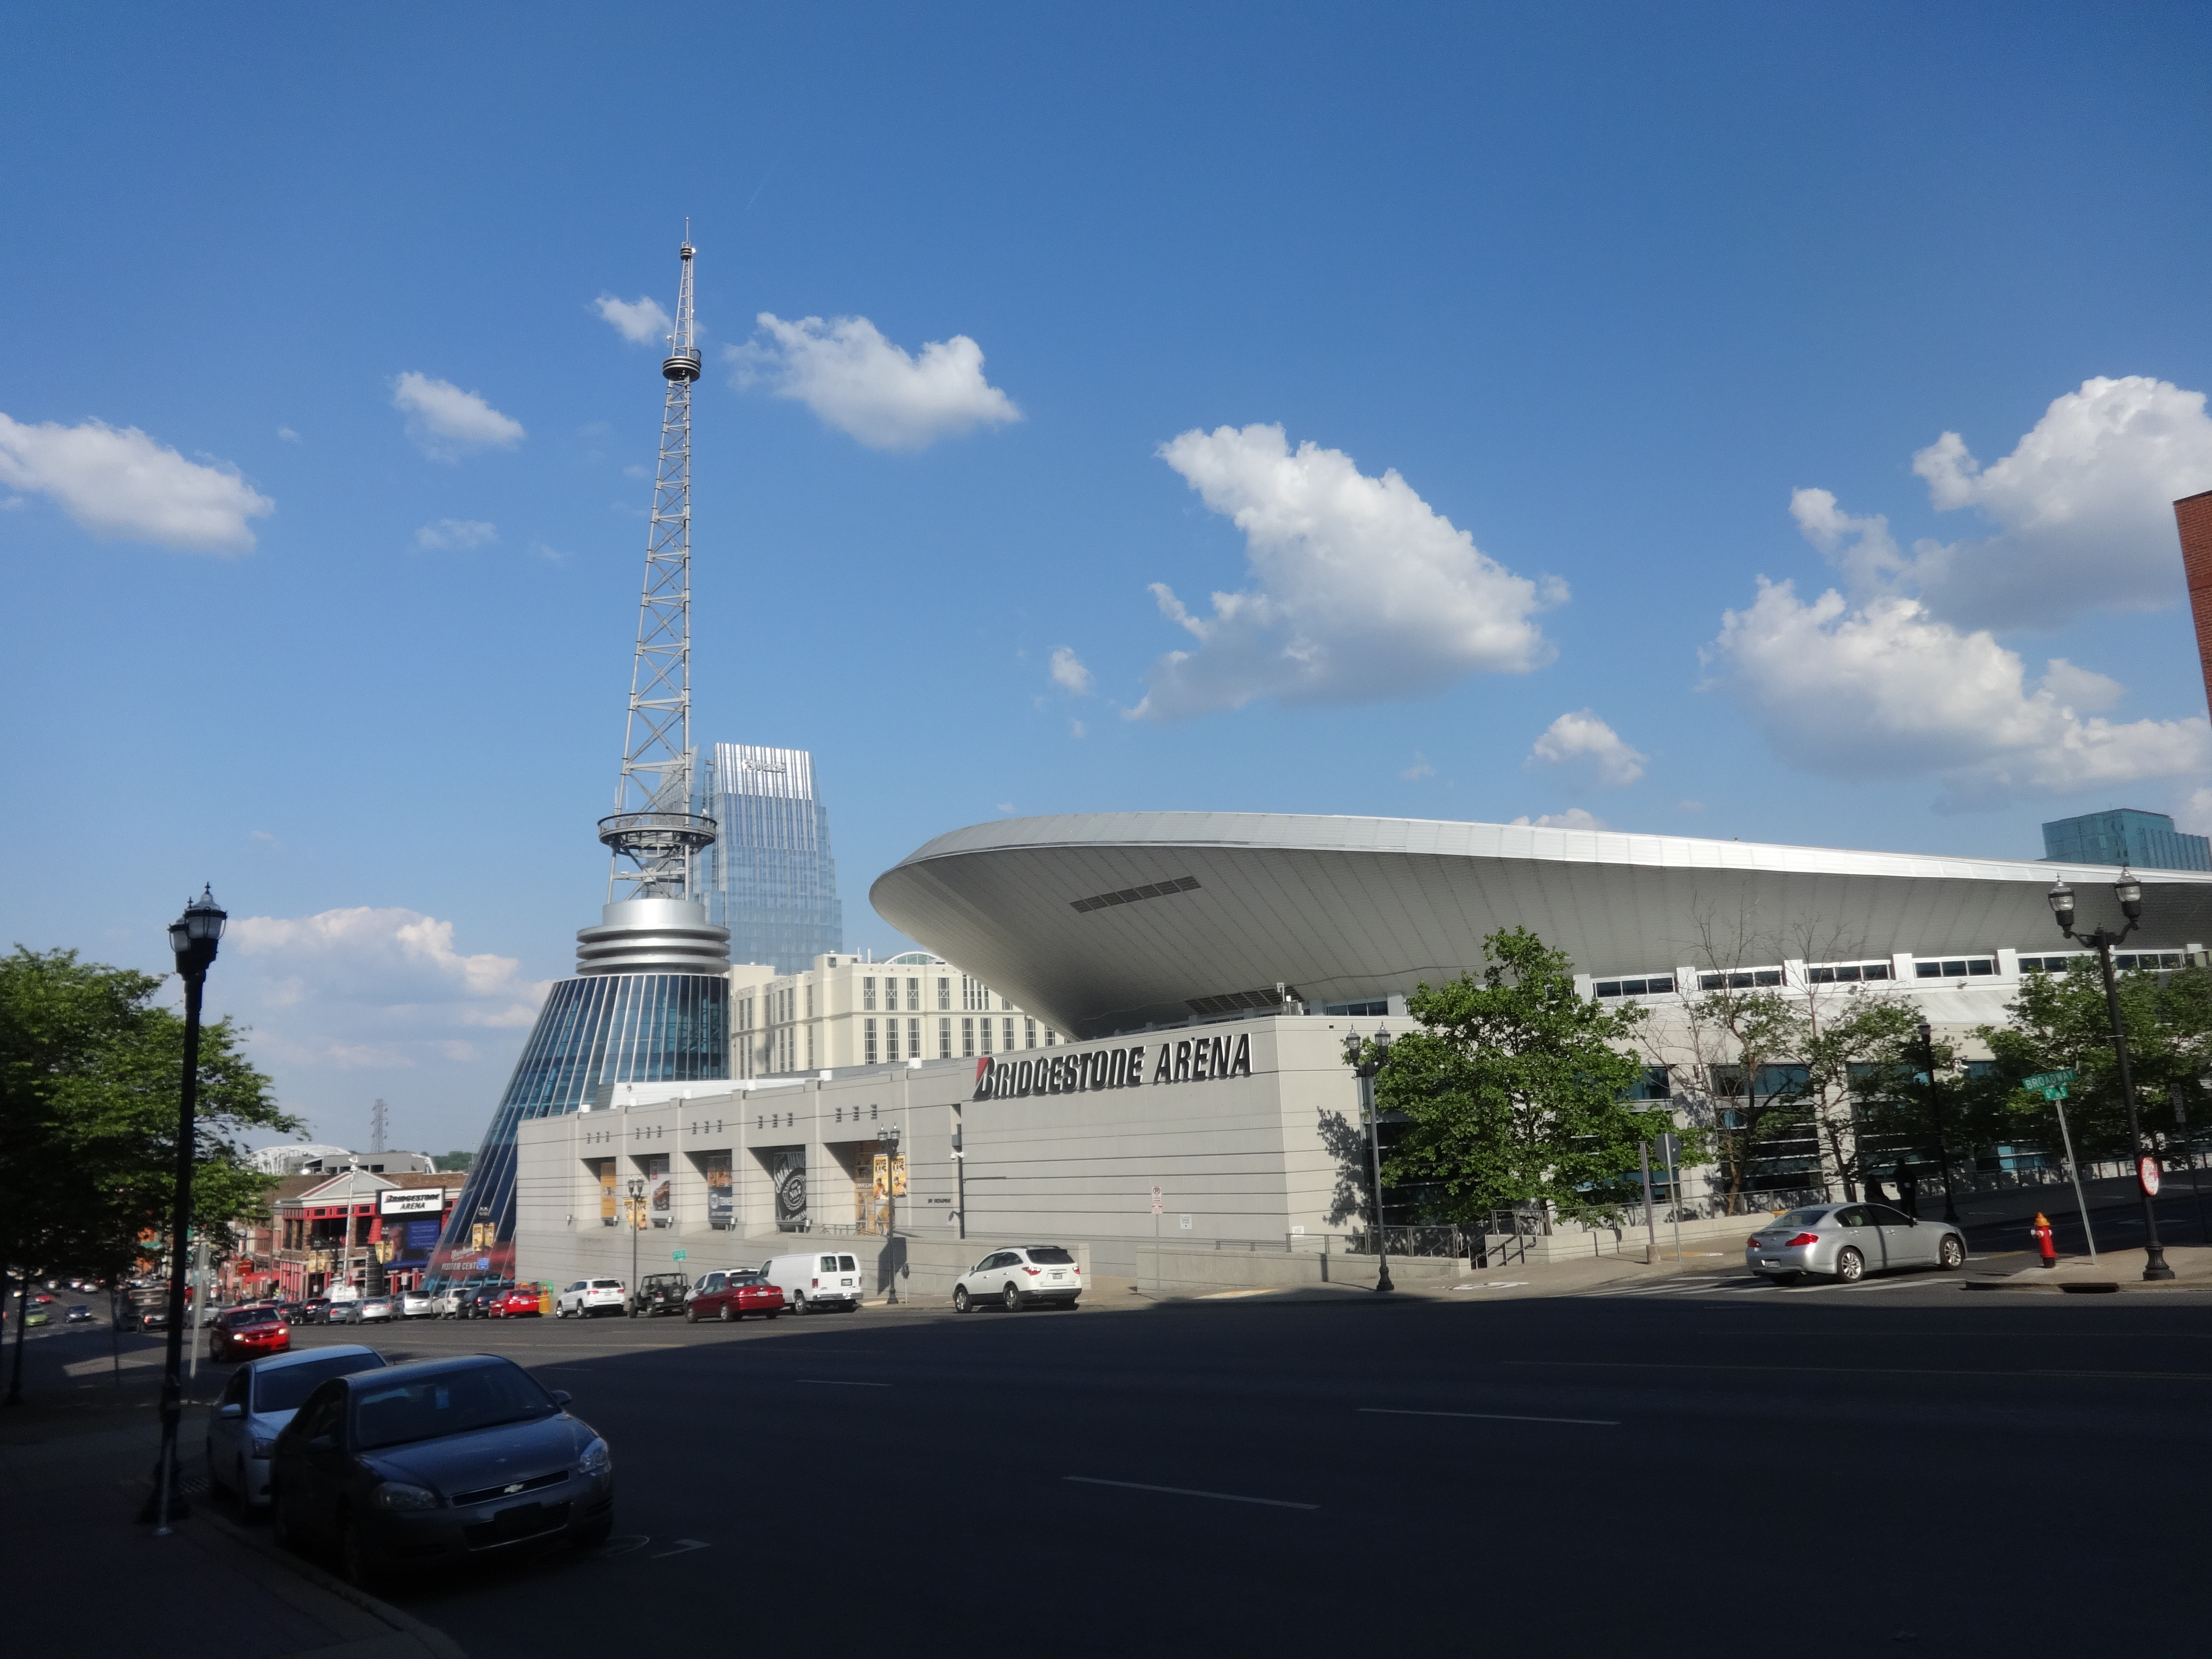 Bridgestone Arena - Wikipedia